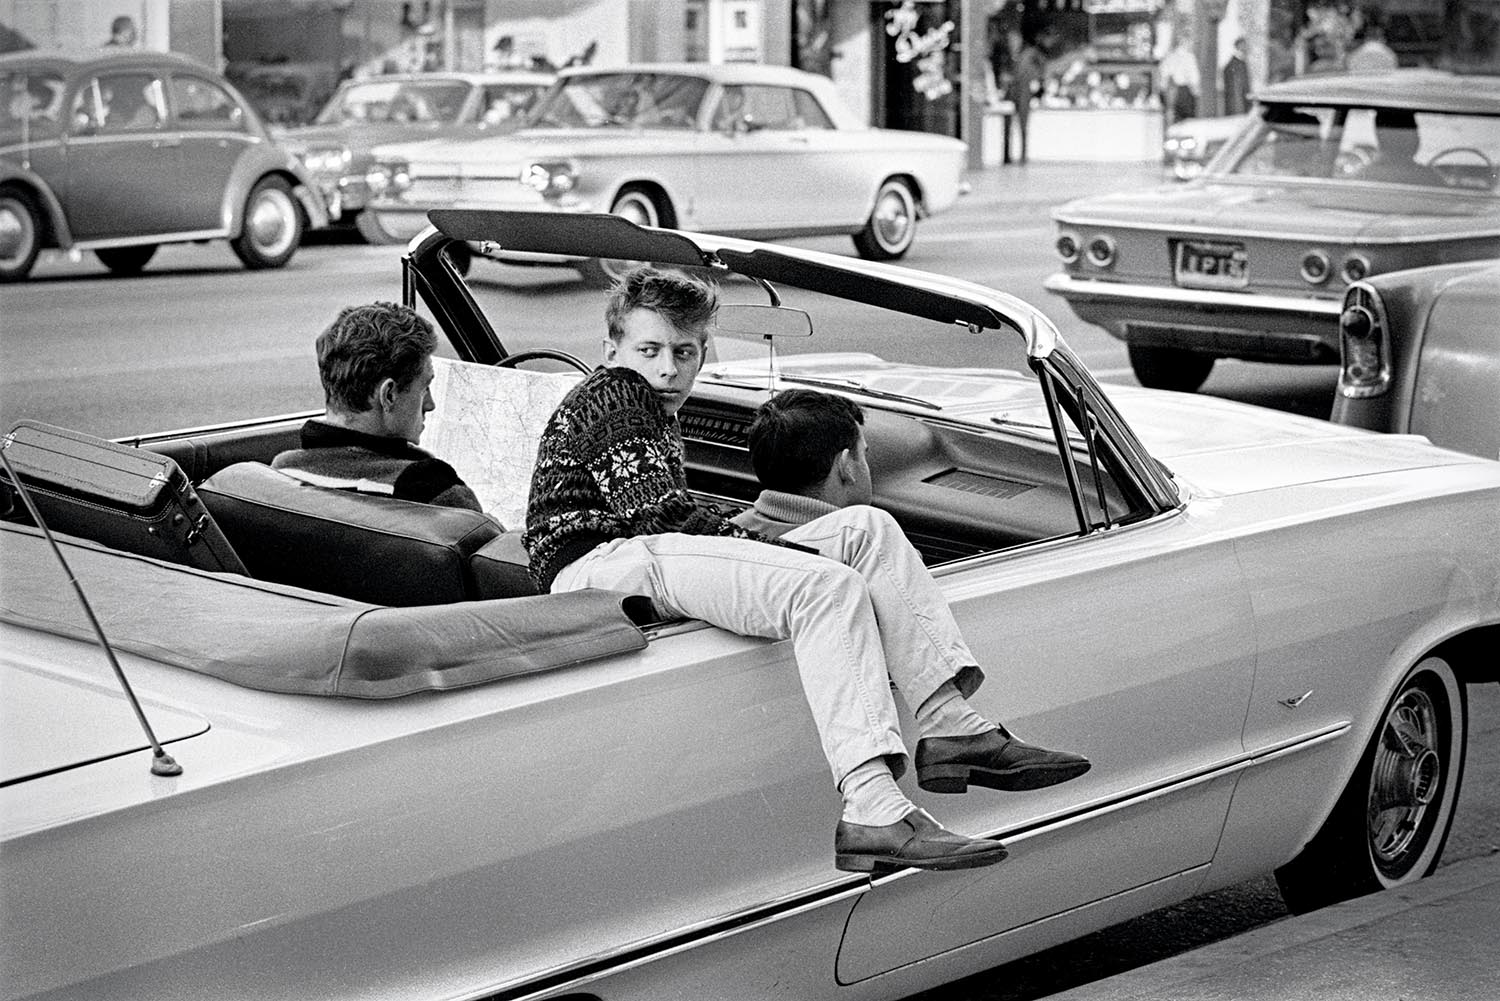   Lost on Hollywood Blvd., 1963  